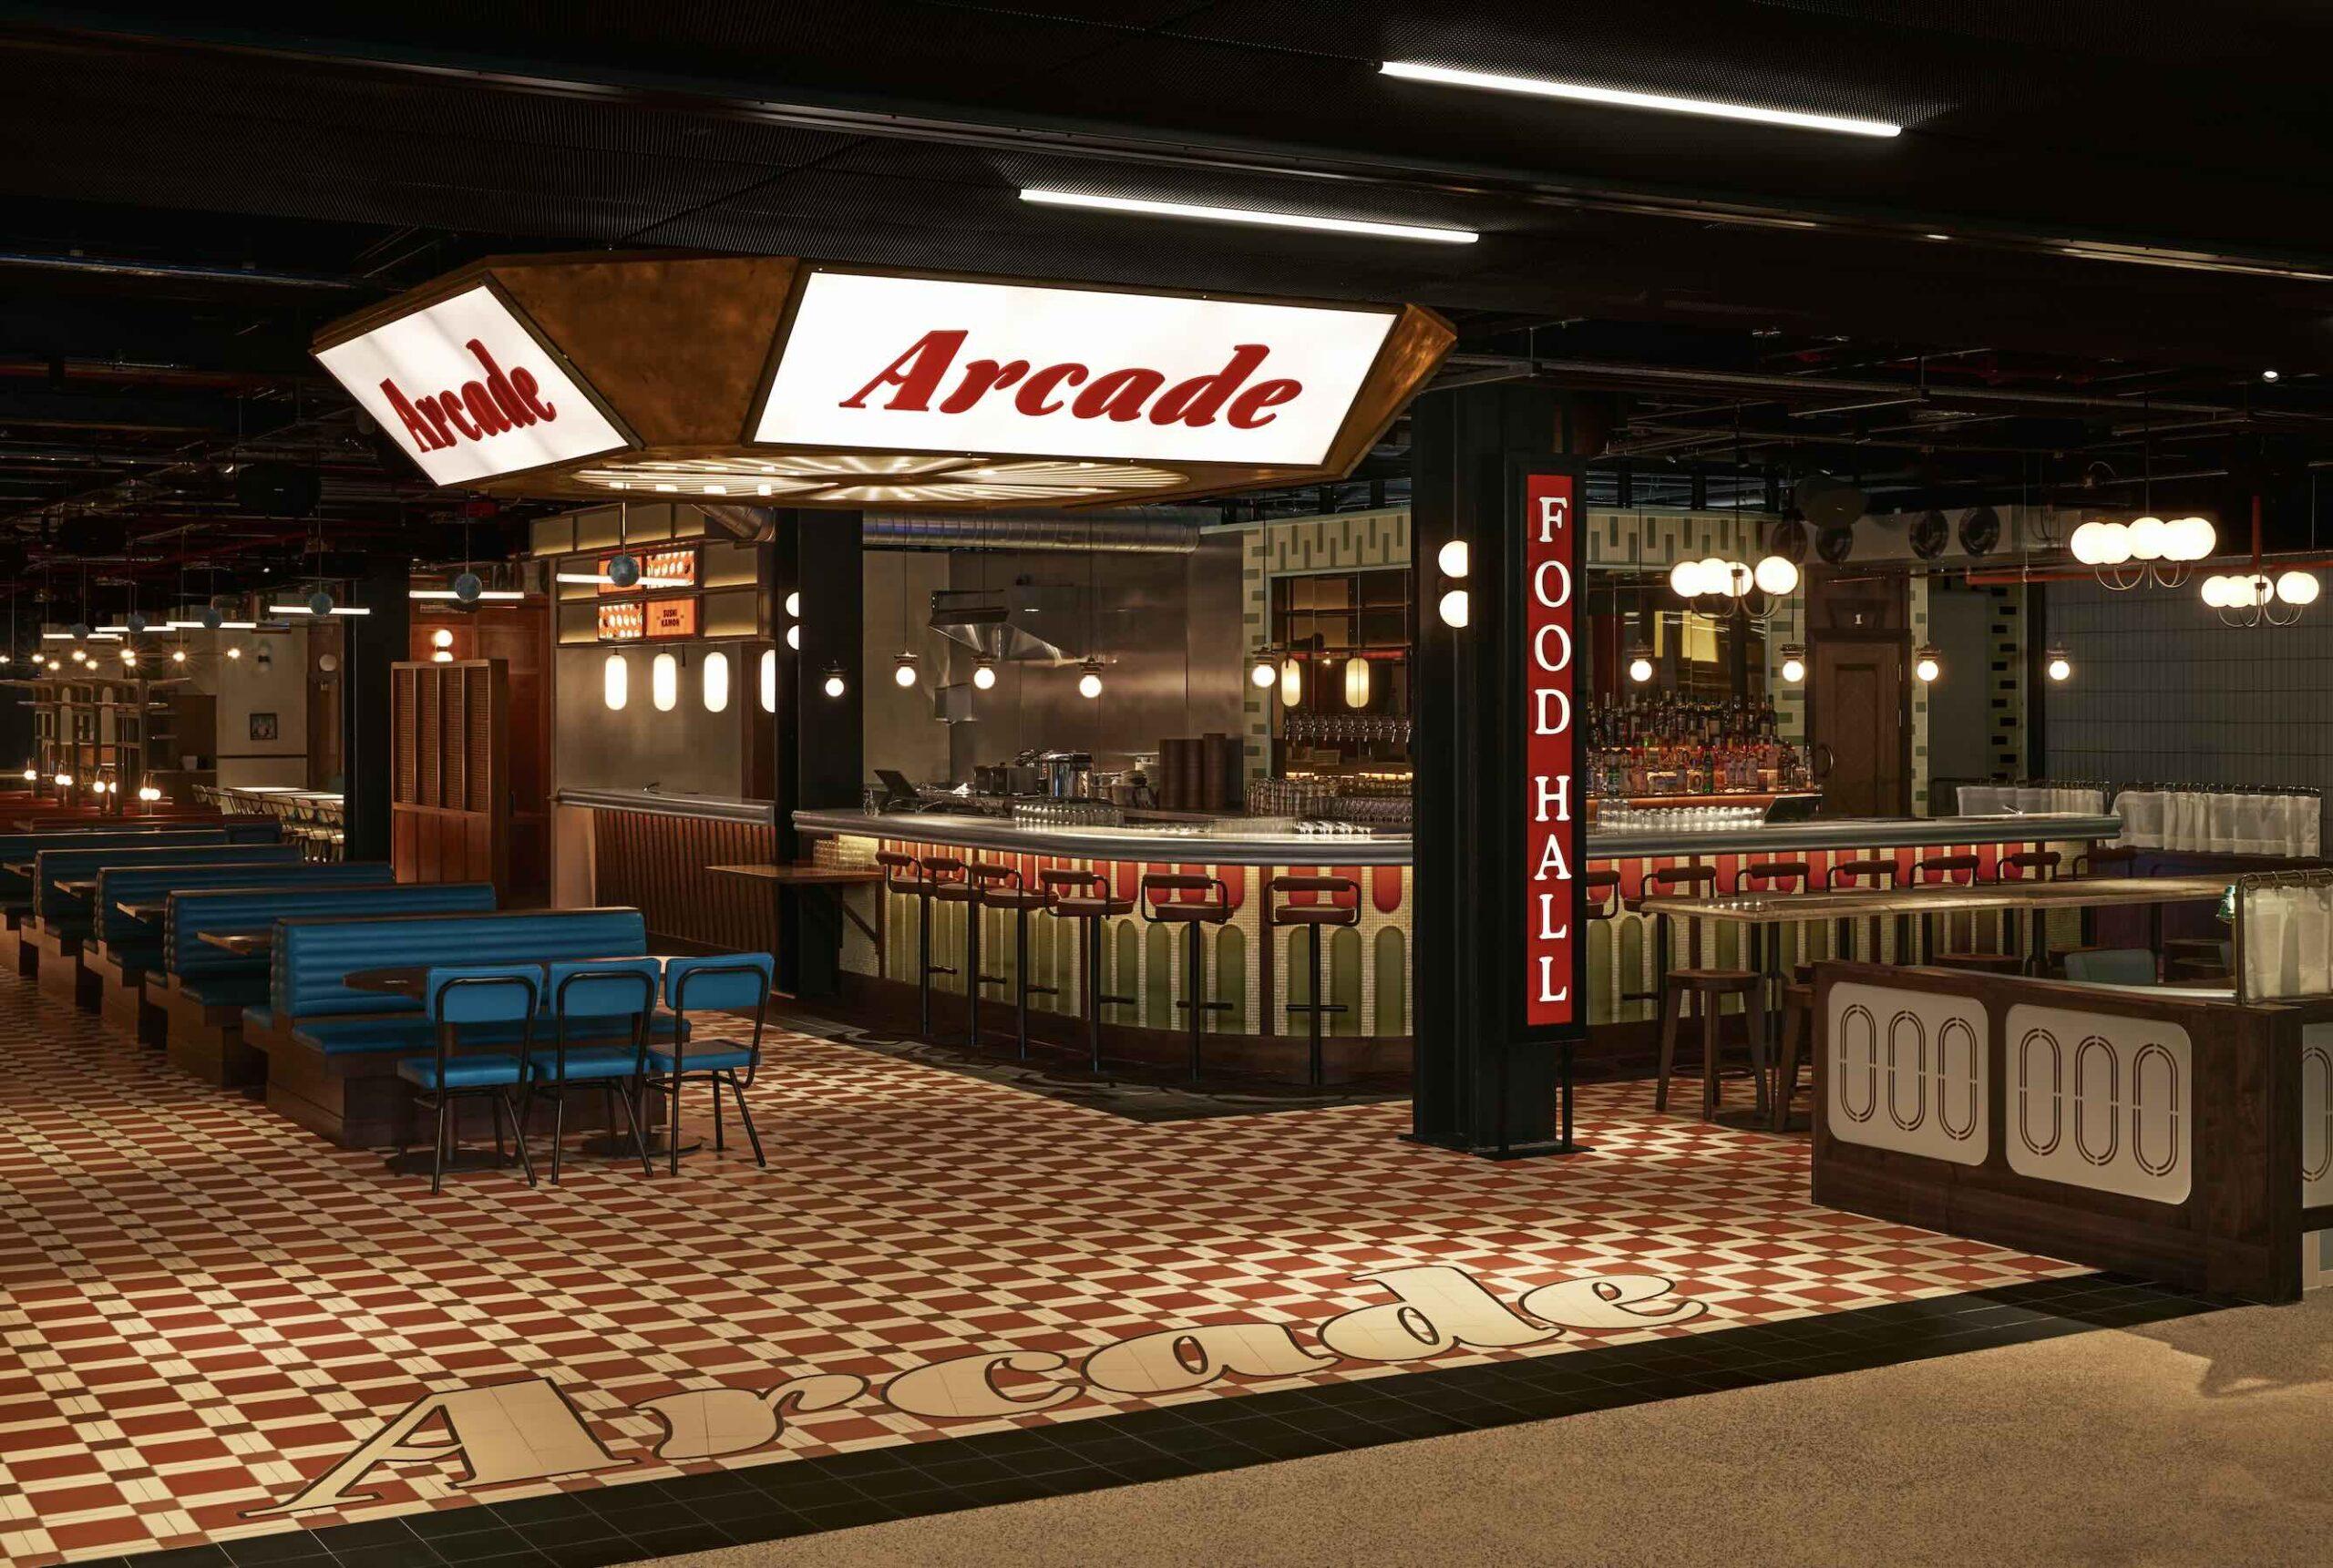 Arcade Food Hall is coming from London to Riyadh-image